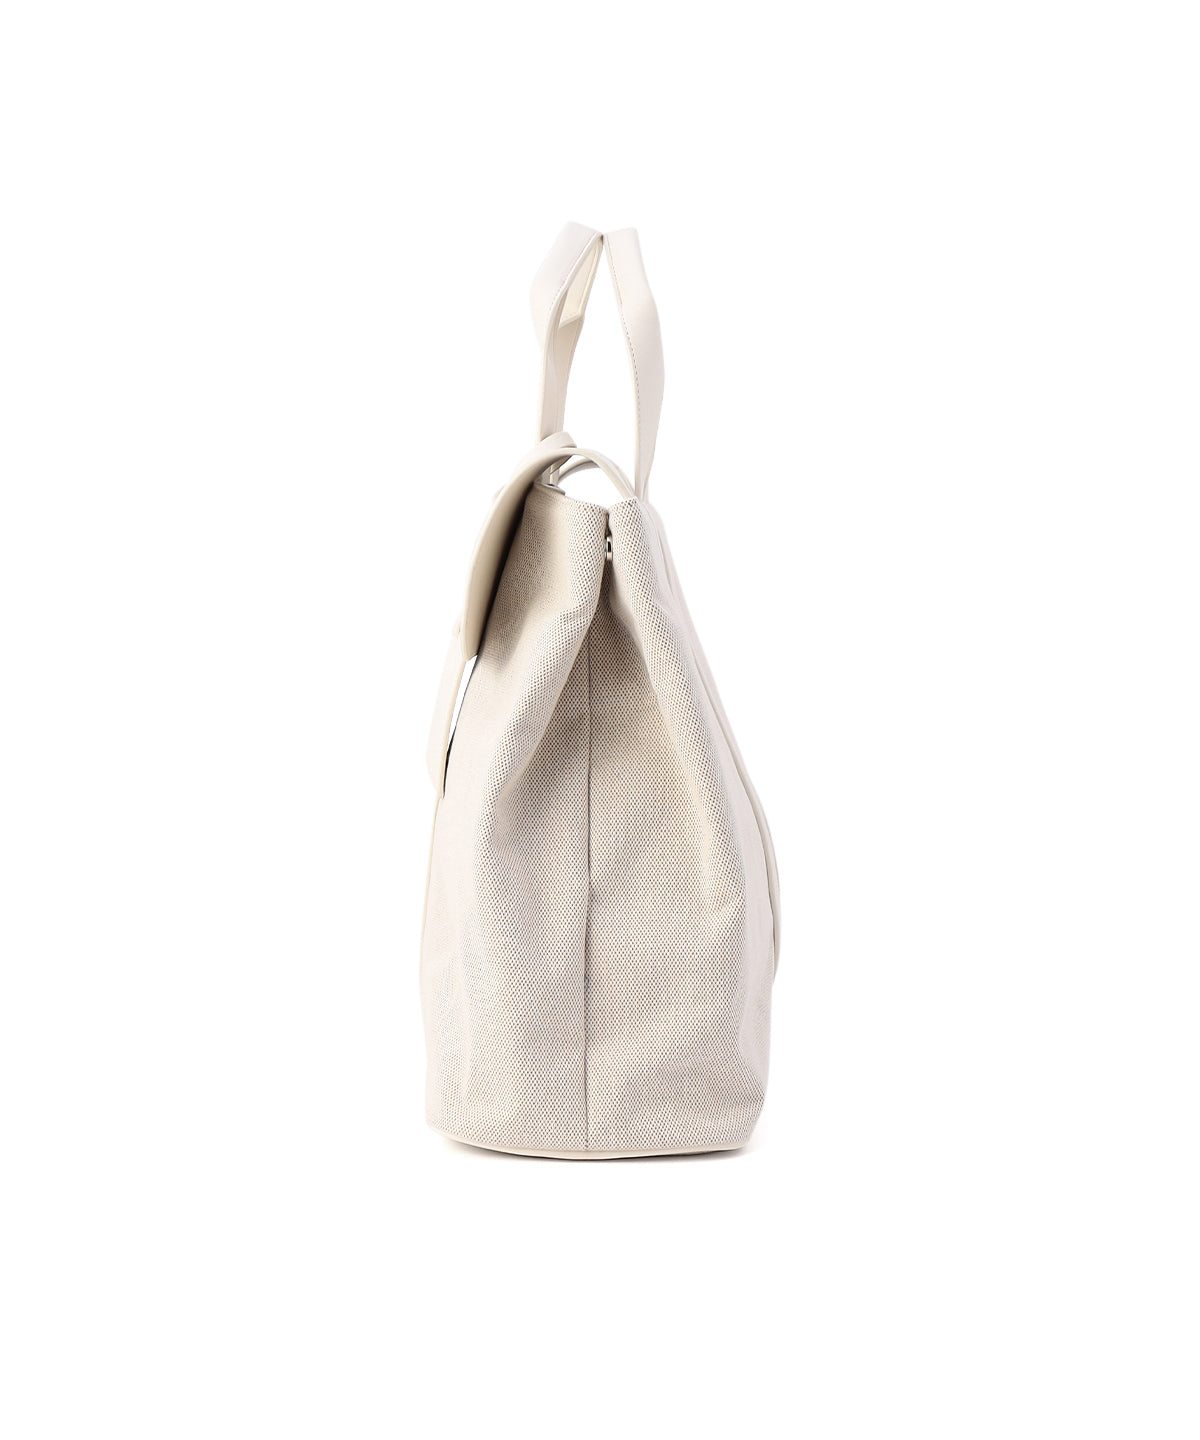 Two Tone Kente Bag (Large)WHITE